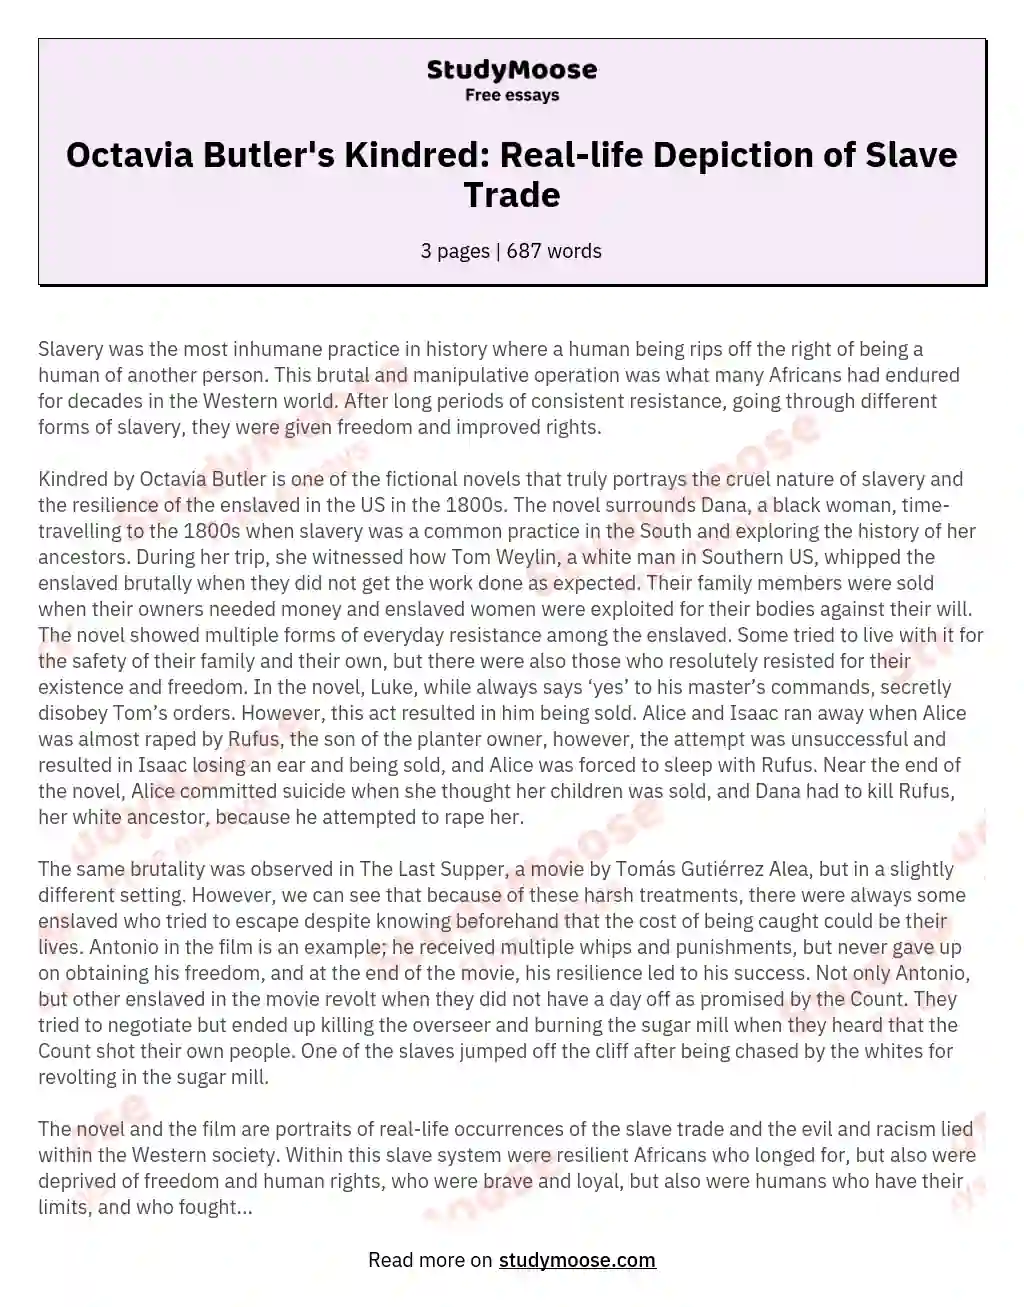 Octavia Butler's Kindred: Real-life Depiction of Slave Trade essay